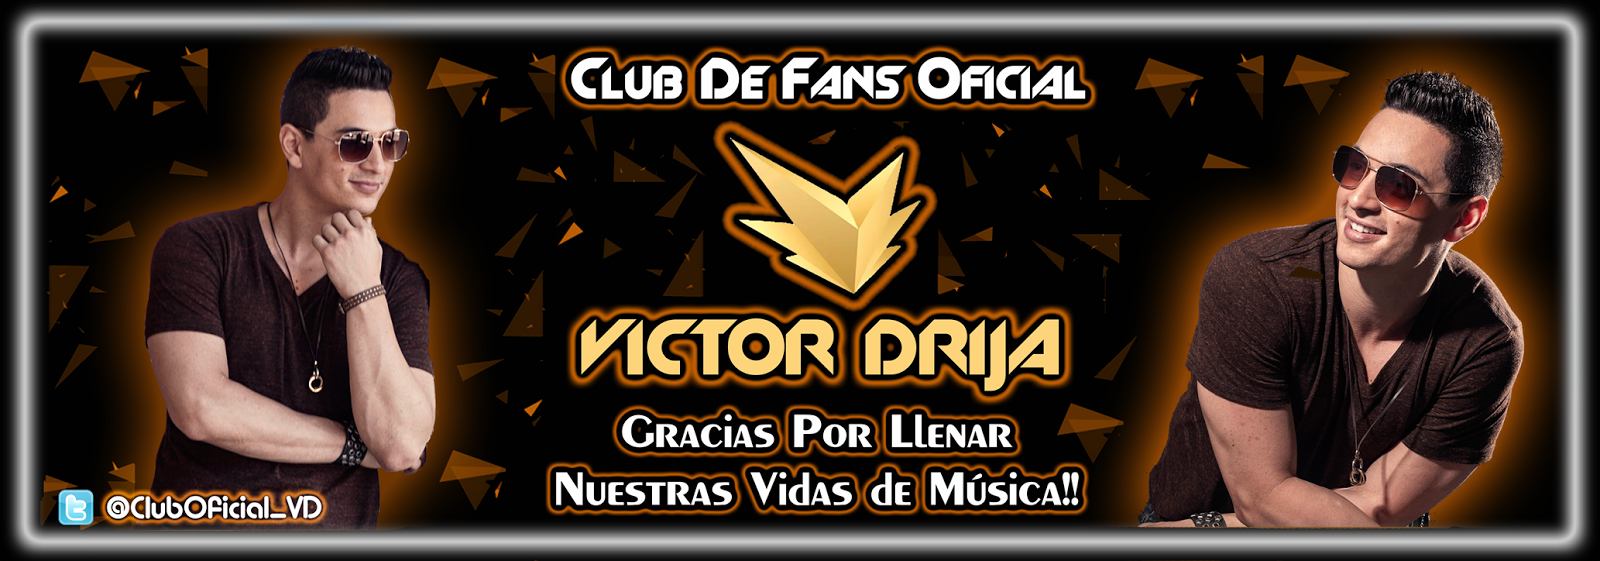 Club Fans Victor Drija Oficial